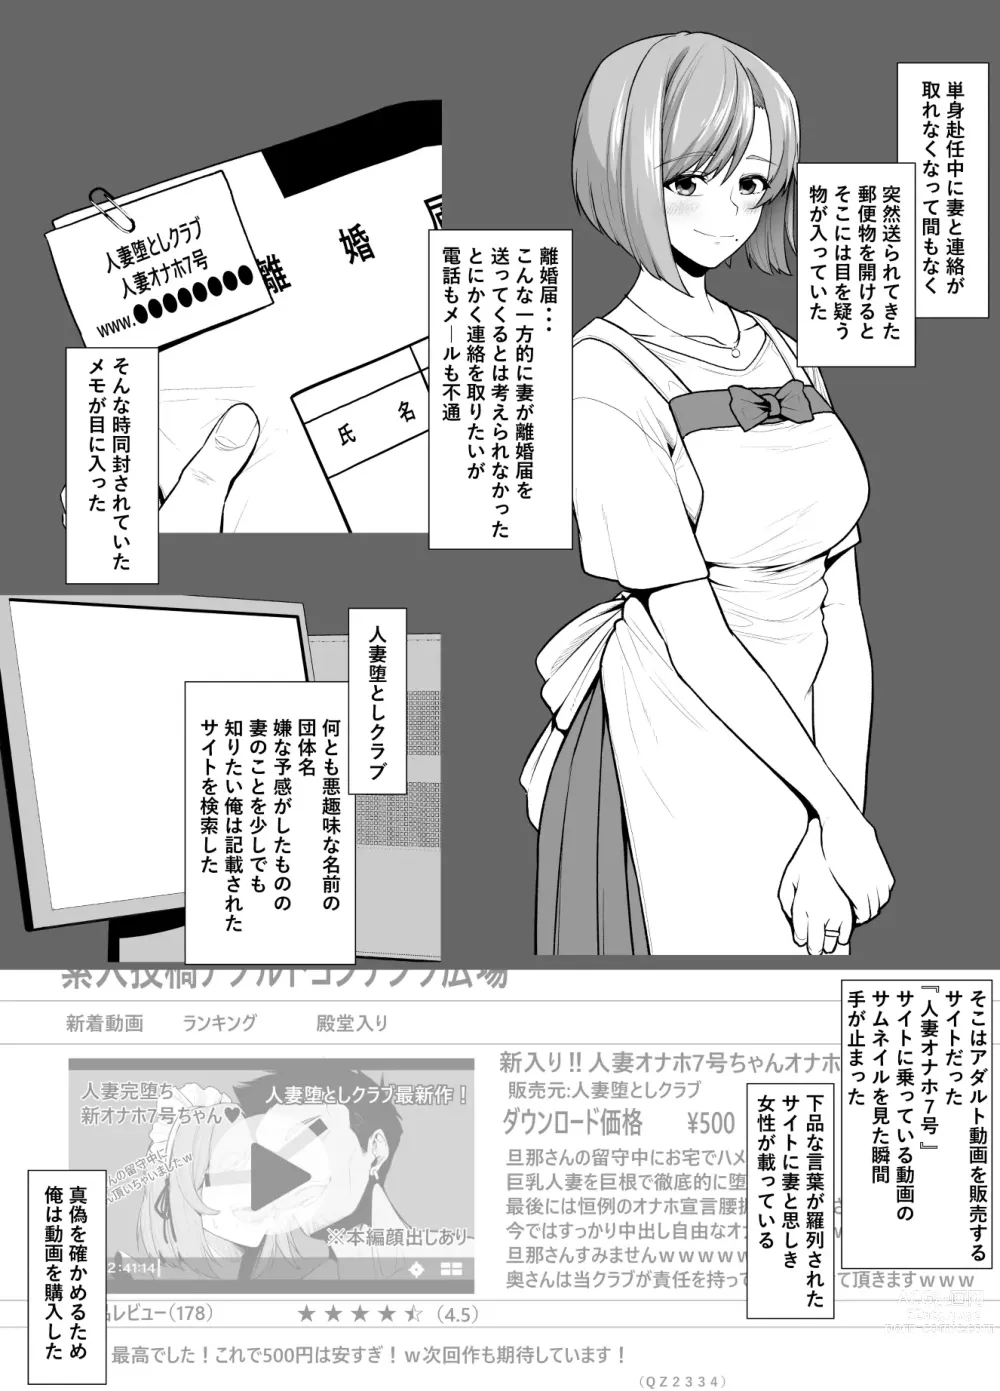 Page 26 of doujinshi Rutsubo vol.01